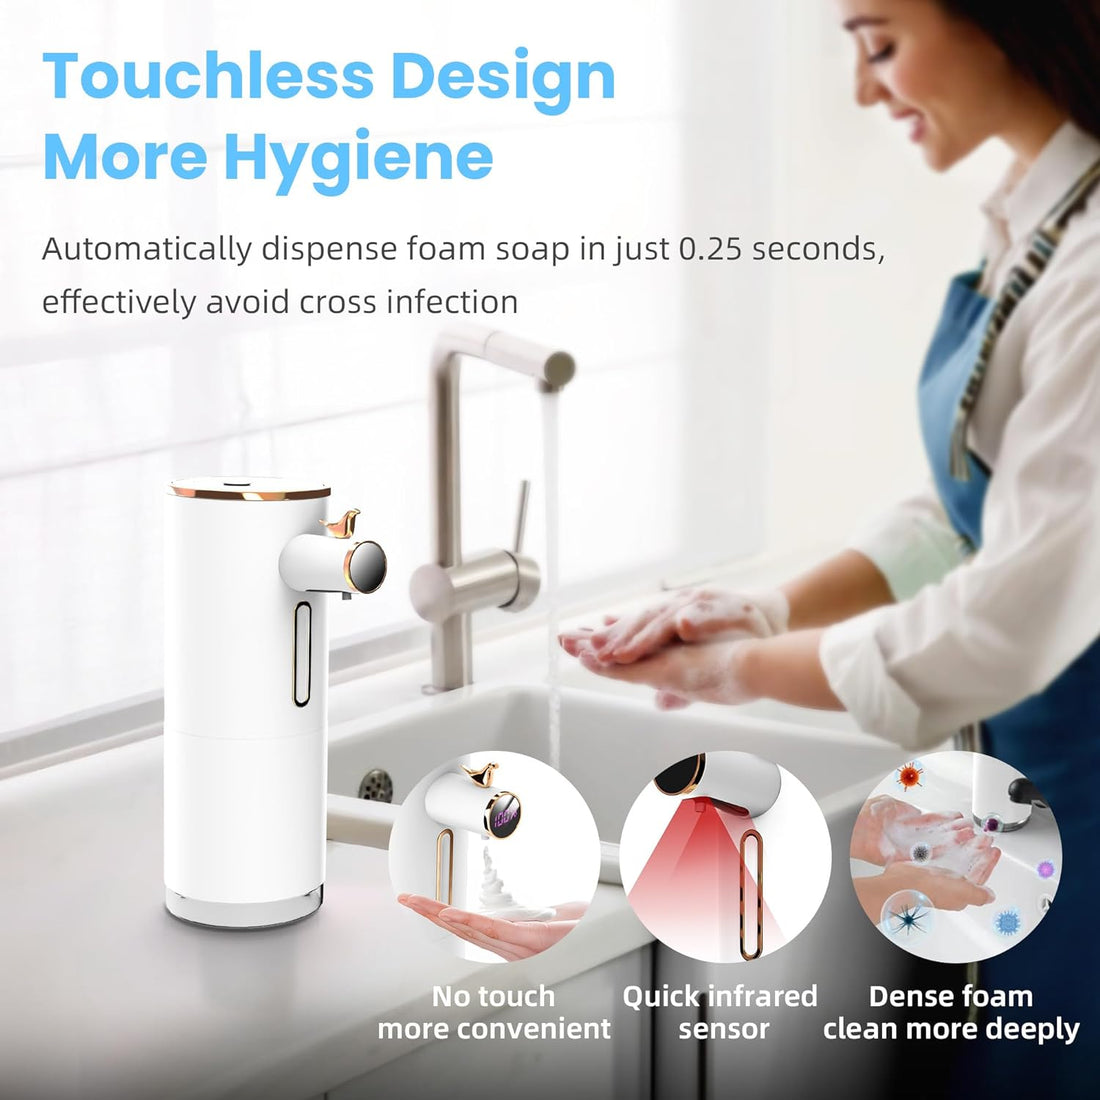 FLOCNOKY Automatic Soap Dispenser, Foaming Soap Dispenser Touchless, 3 Levels Adjustable Soap Volume, USB Rechargeable Hands Free Smart Foam Soap Dispenser for Bathroom Kitchen